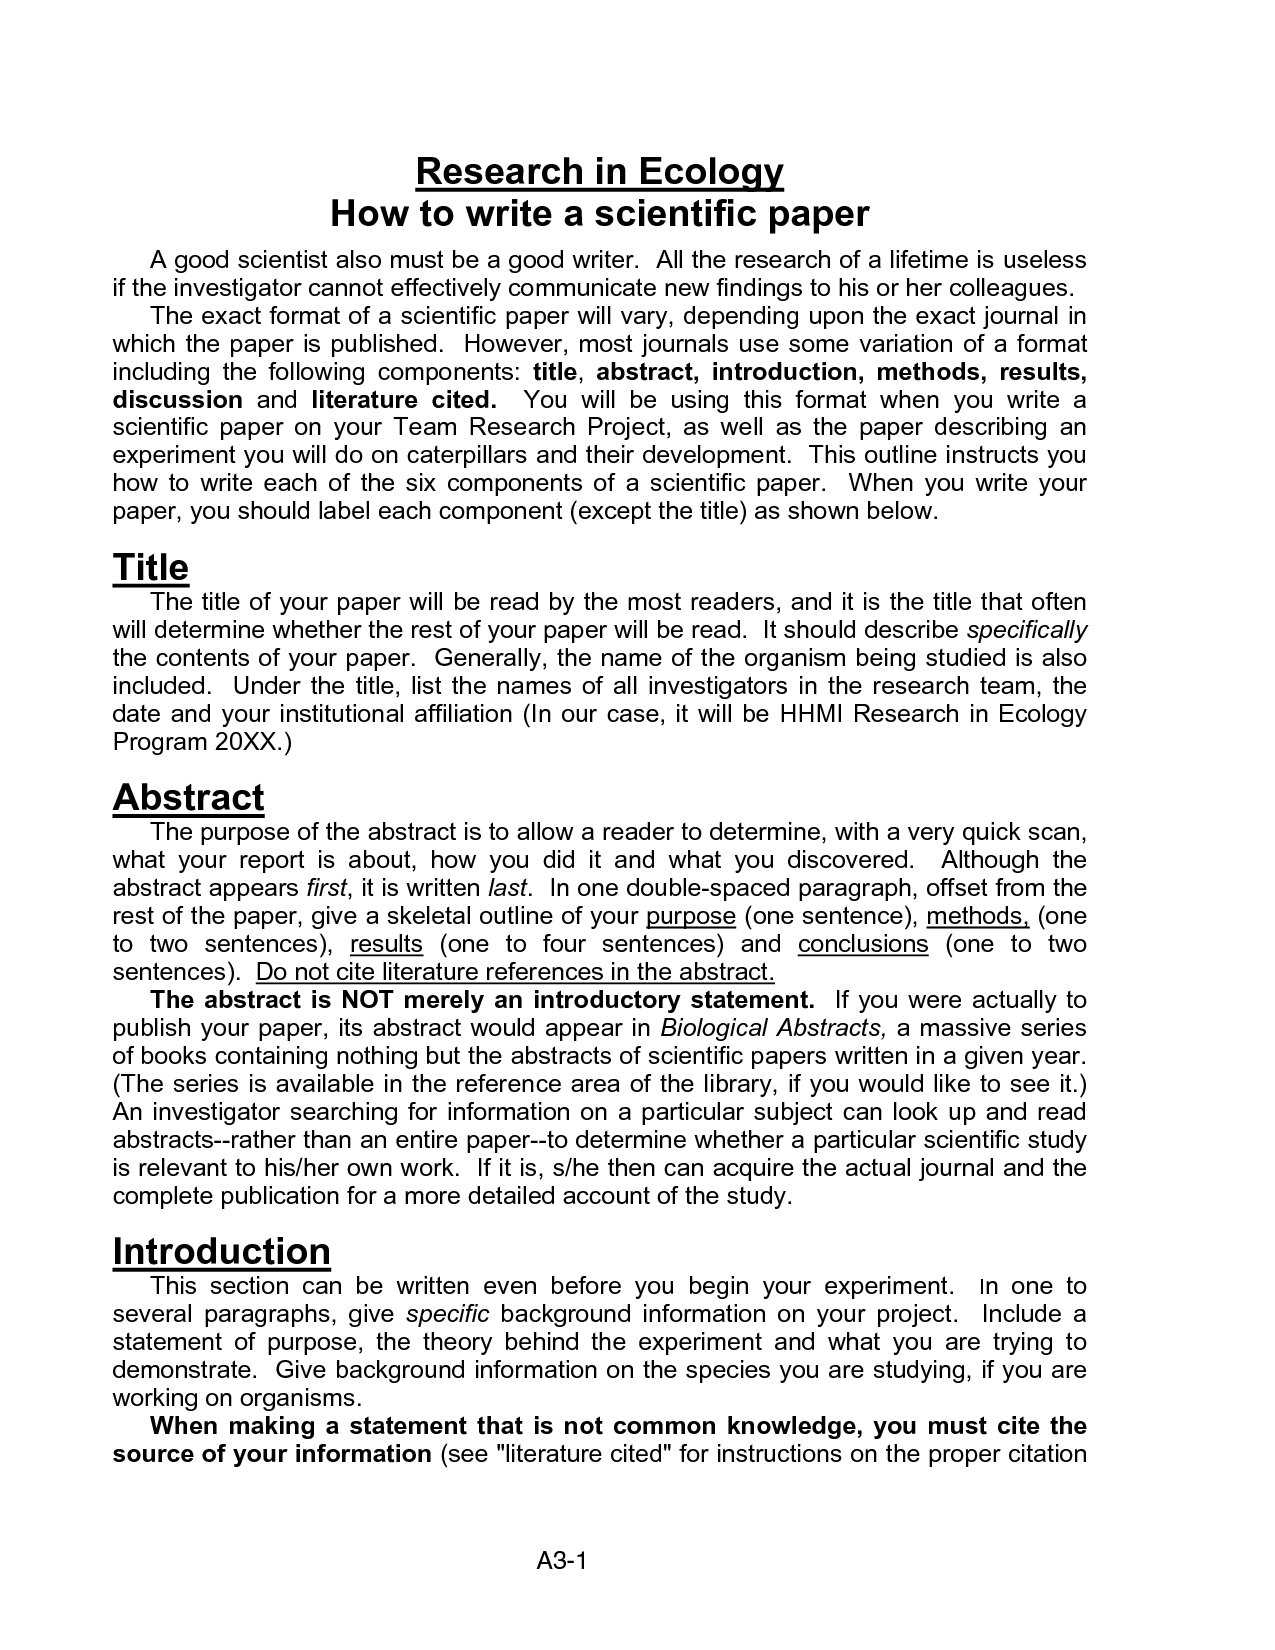 example of scientific method research paper